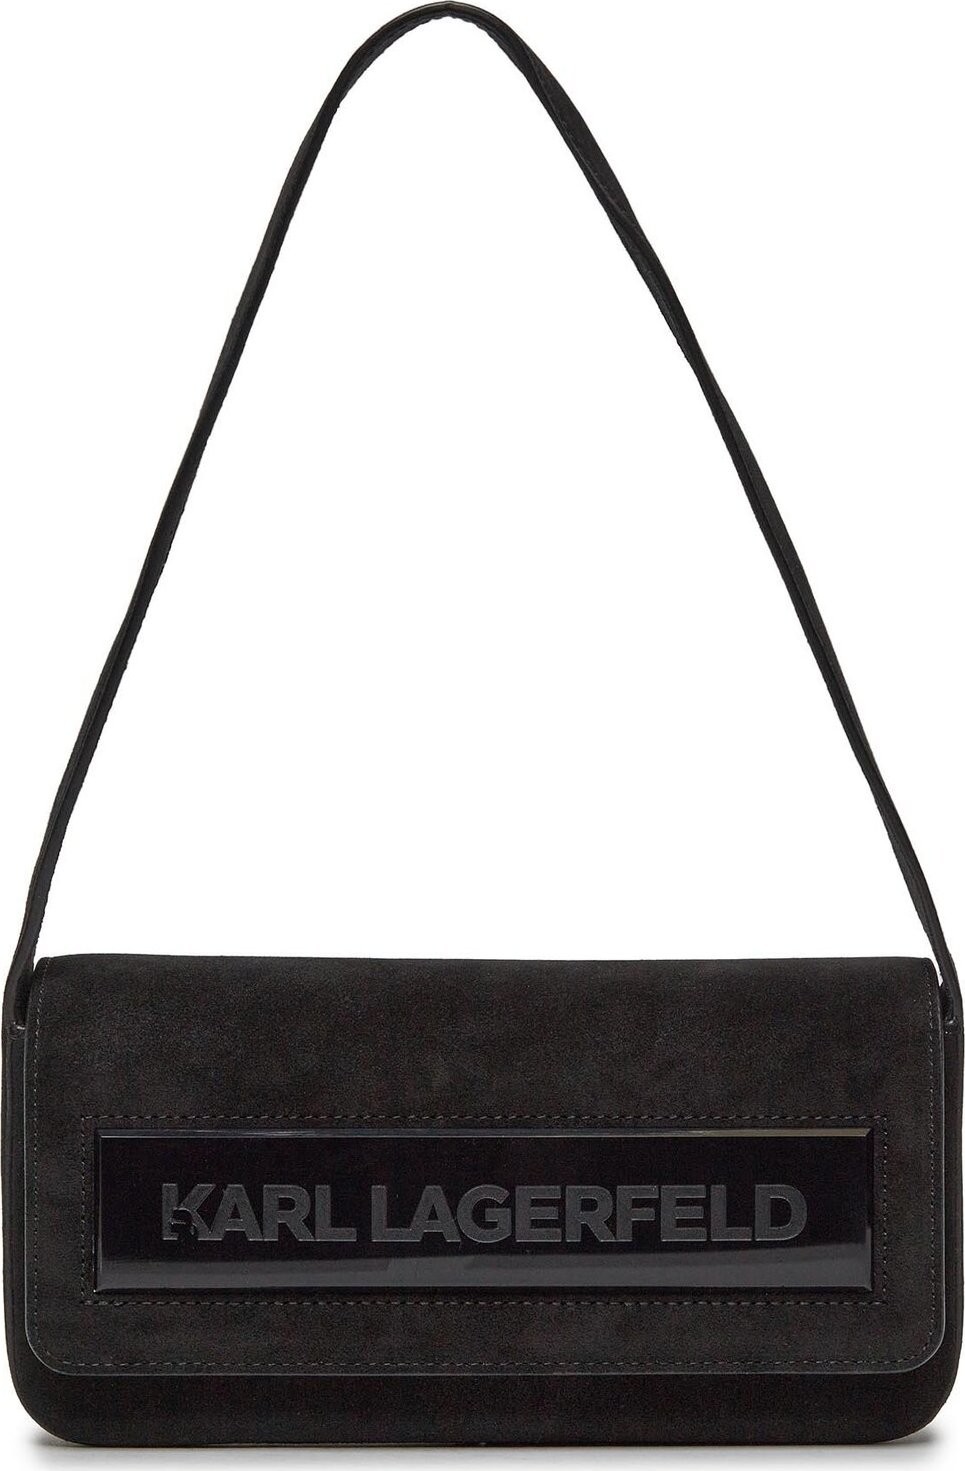 Kabelka KARL LAGERFELD 235W3044 A999 Black